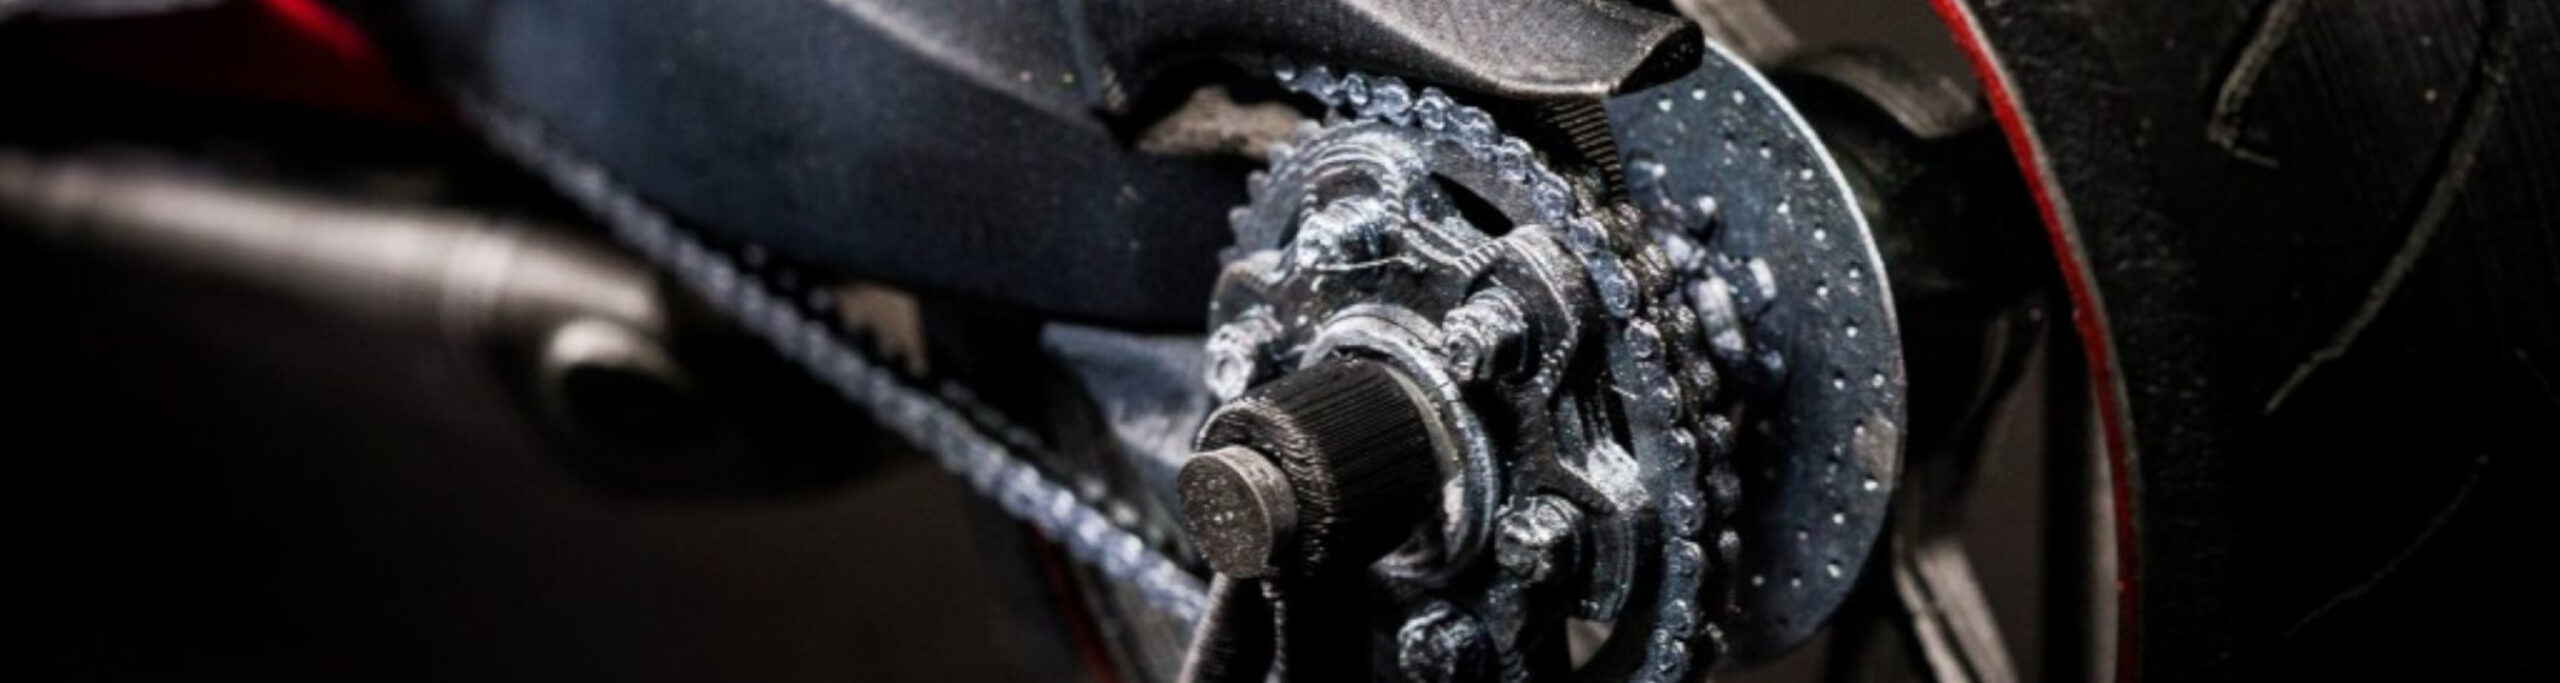 Close-up of 3D printed Ducati motorcycle drivetrain